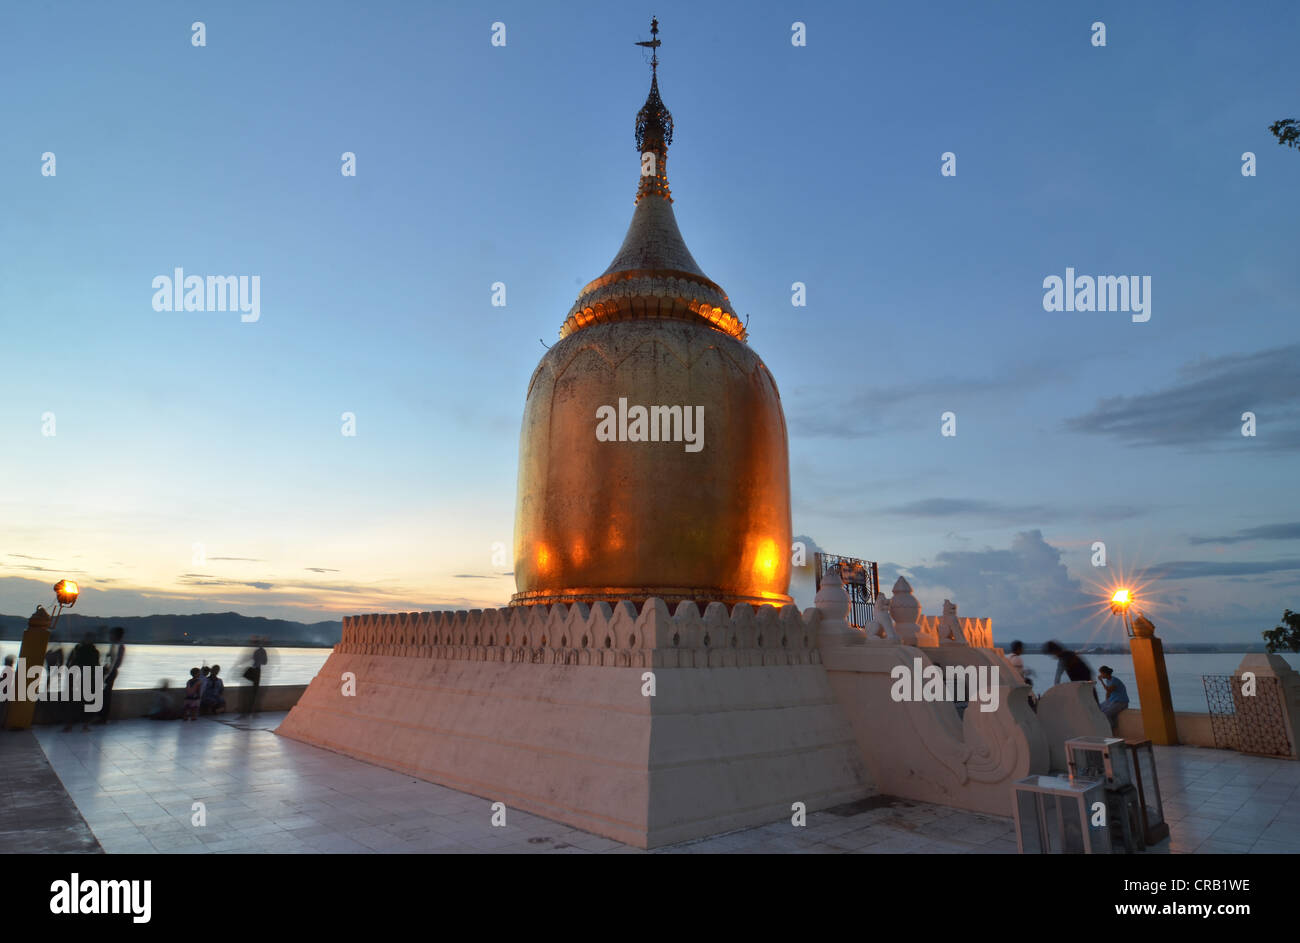 Di birmani di visitatori e pellegrini al golden pagoda Bupaya sul Fiume Ayeyarwady al crepuscolo, Old Bagan, pagano, birmania, myanmar Foto Stock